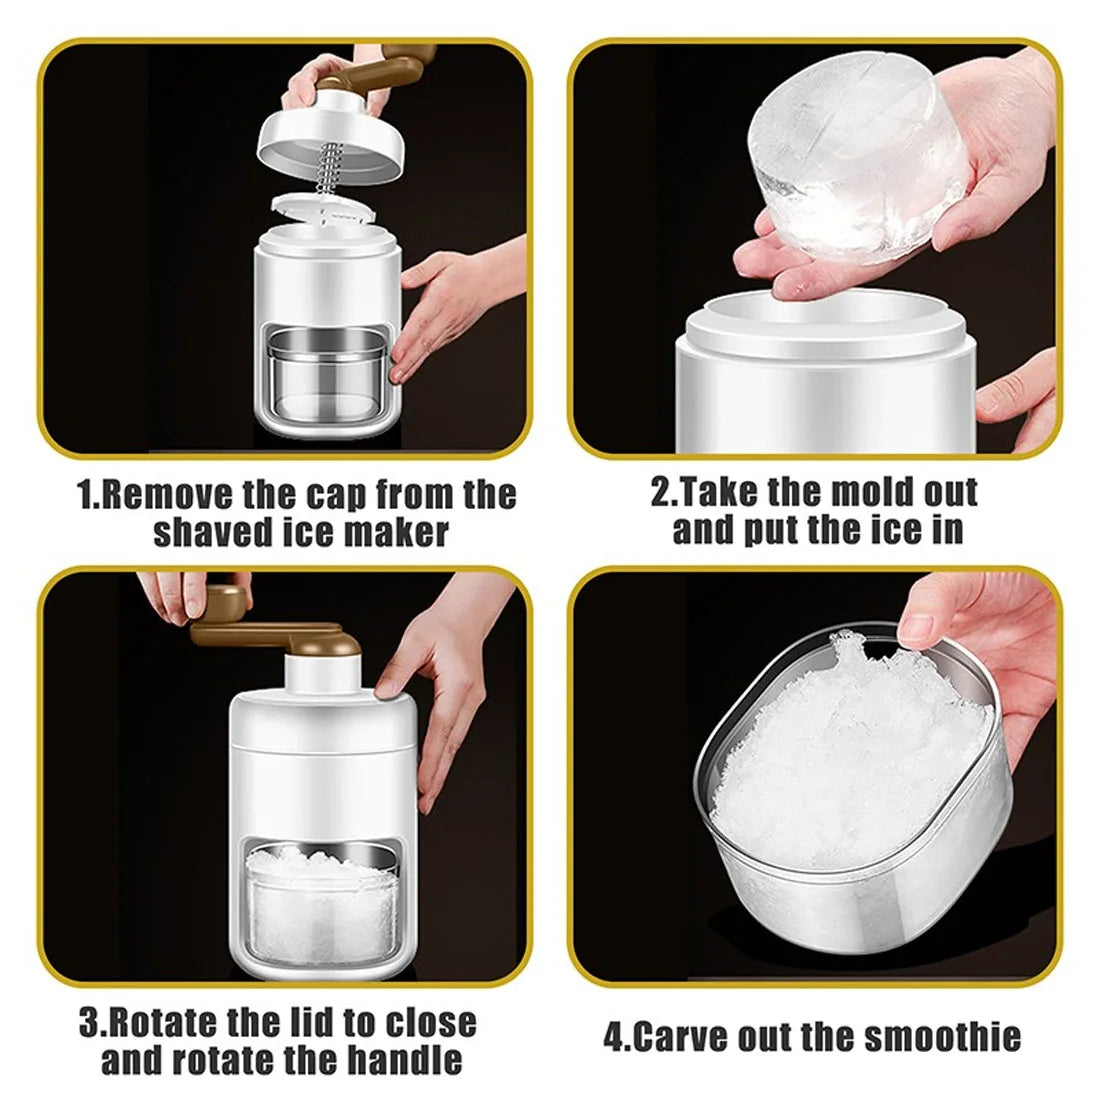 Hand-Crank Ice Crusher
Milk Shake Making Smoothie
Household Ice Cubes Model Box
Ice Shaver Manual Portable